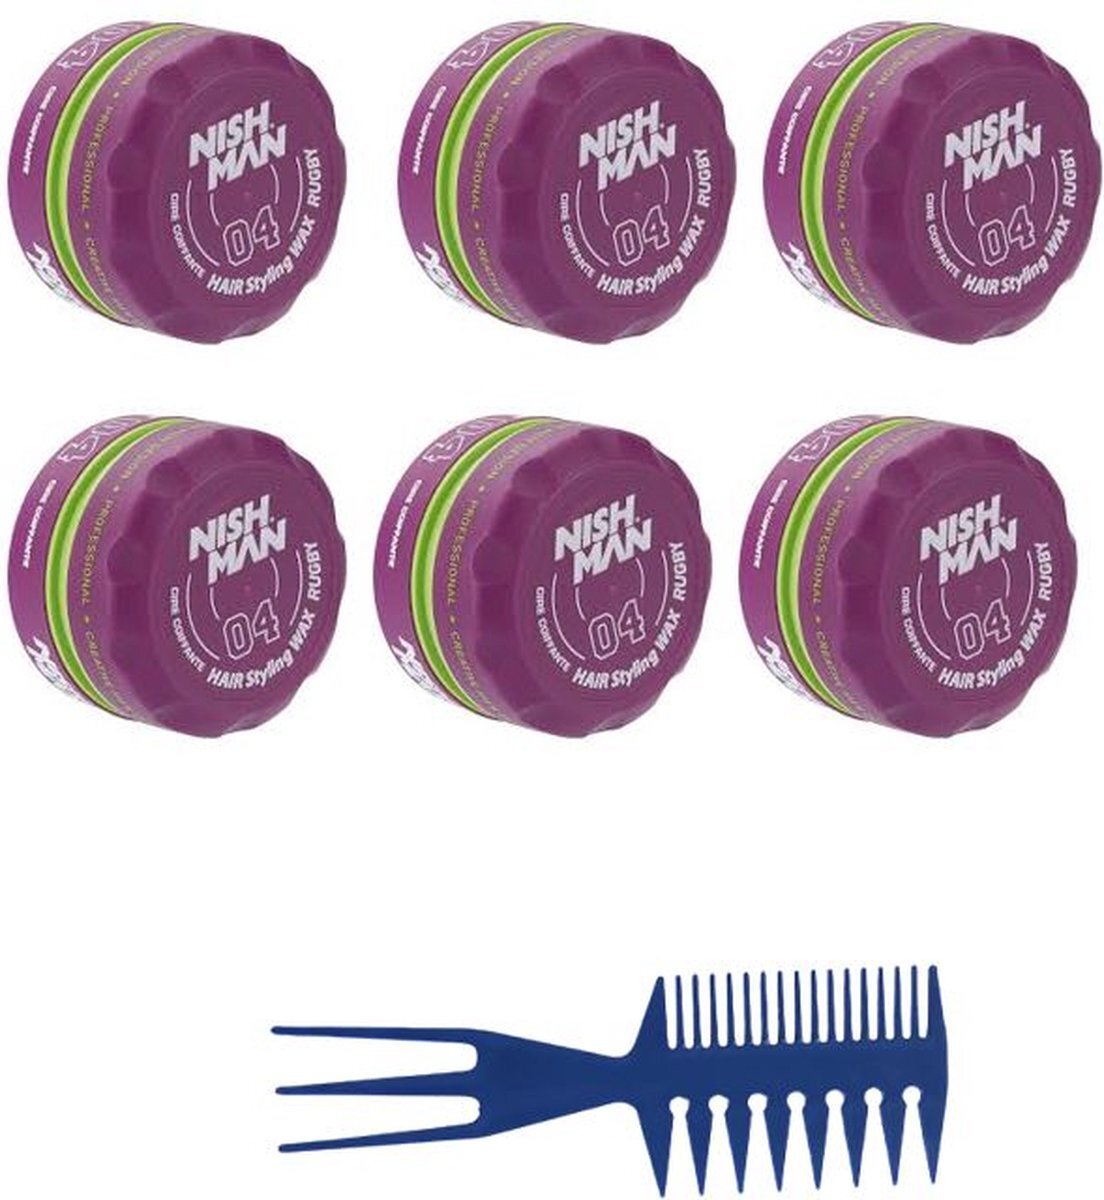 Nish Man Nishman 04 Hair Styling Wax Ruby 6 stuks + Free Styling Comb